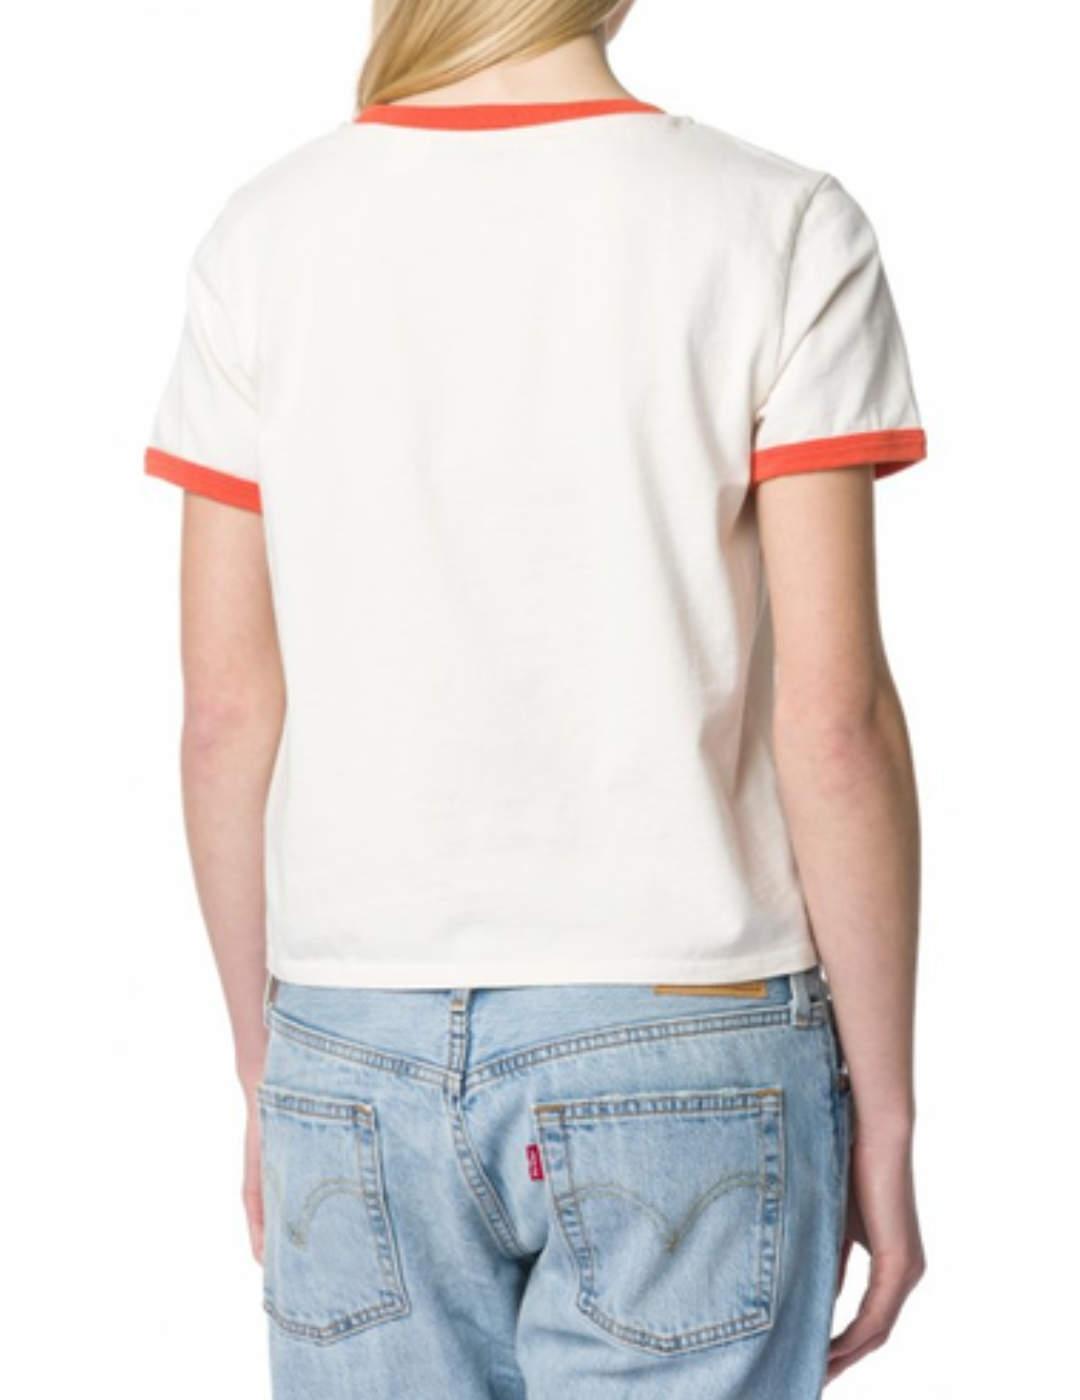 Camiseta Levi´s Surf blanca y naranja manga corta para mujer